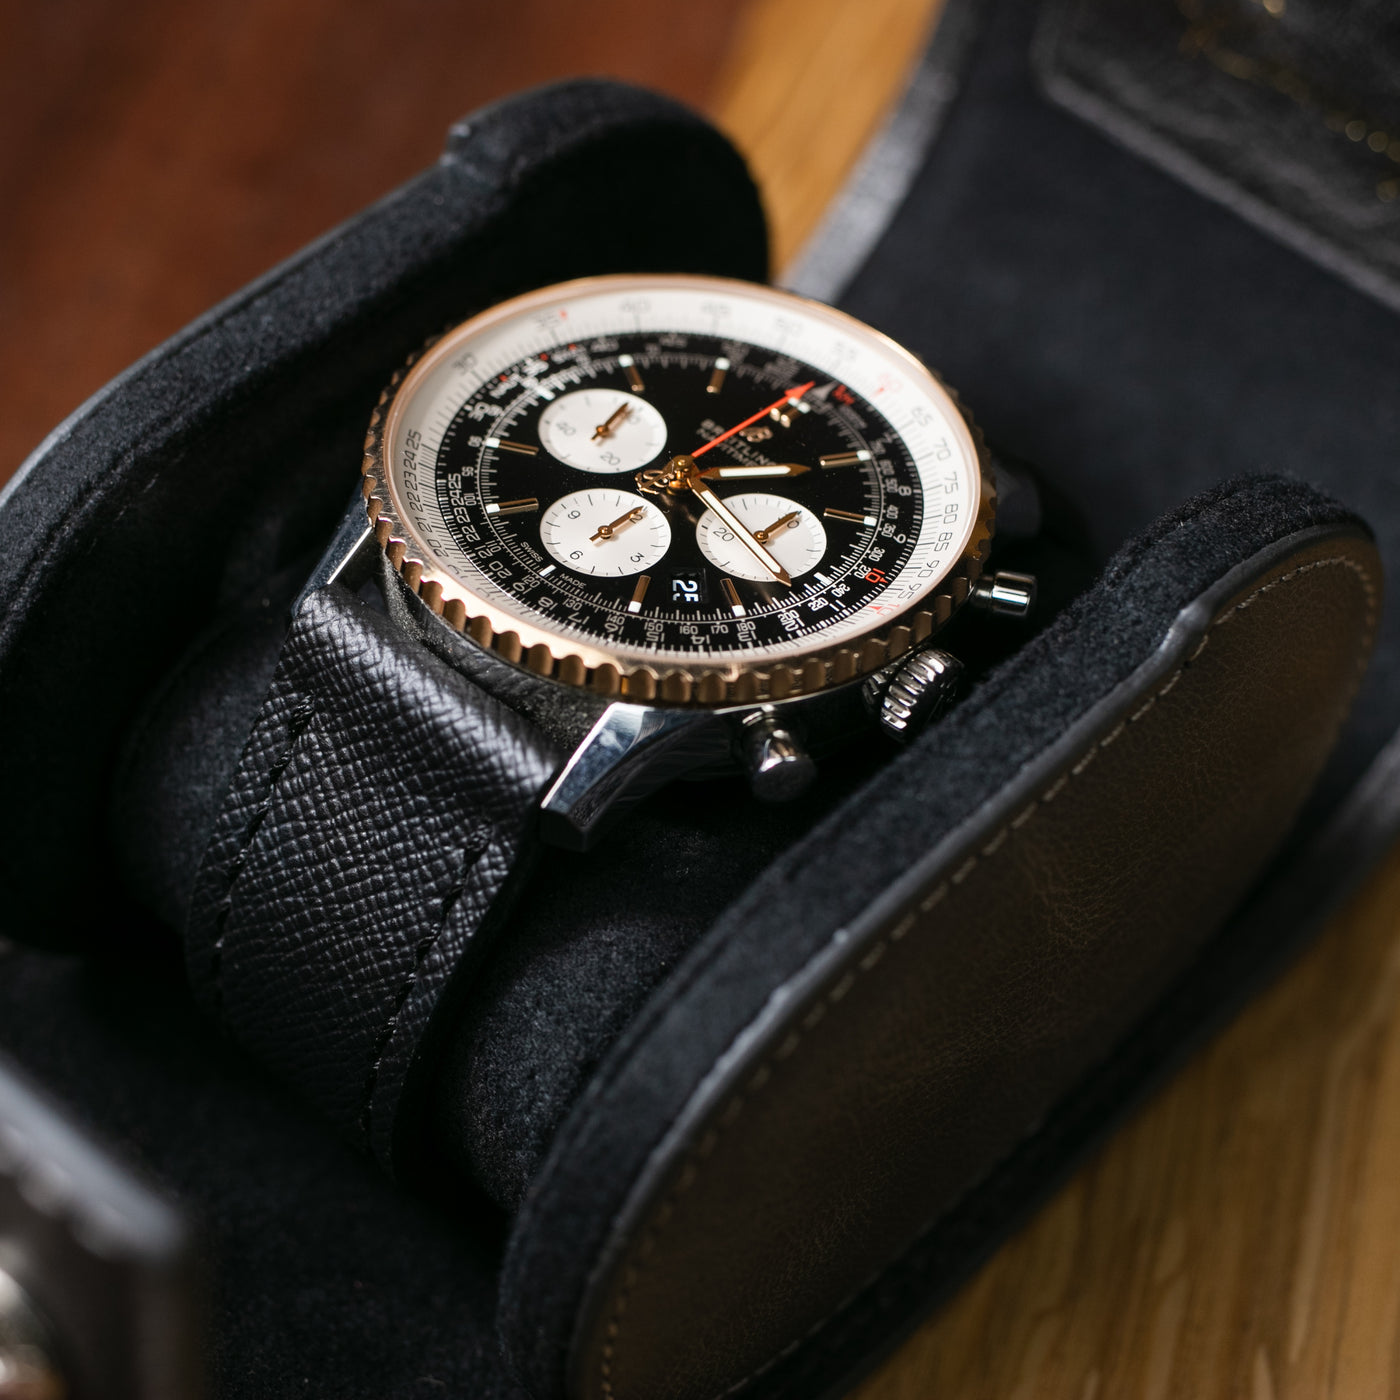 Leather Travel Watch Case - Coal - Single Watch Roll